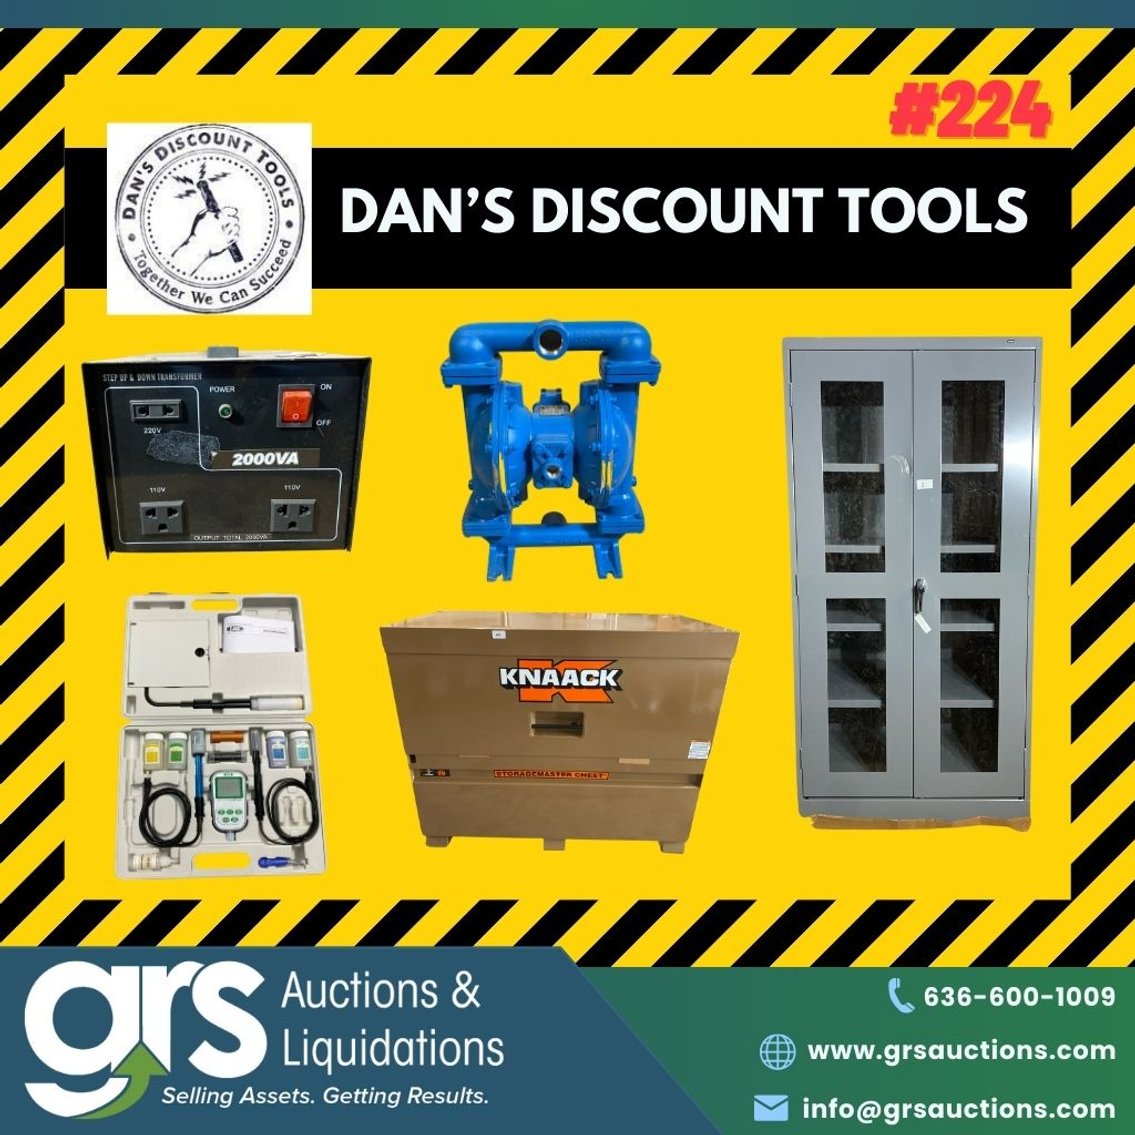 Dan's Discount Tools #224